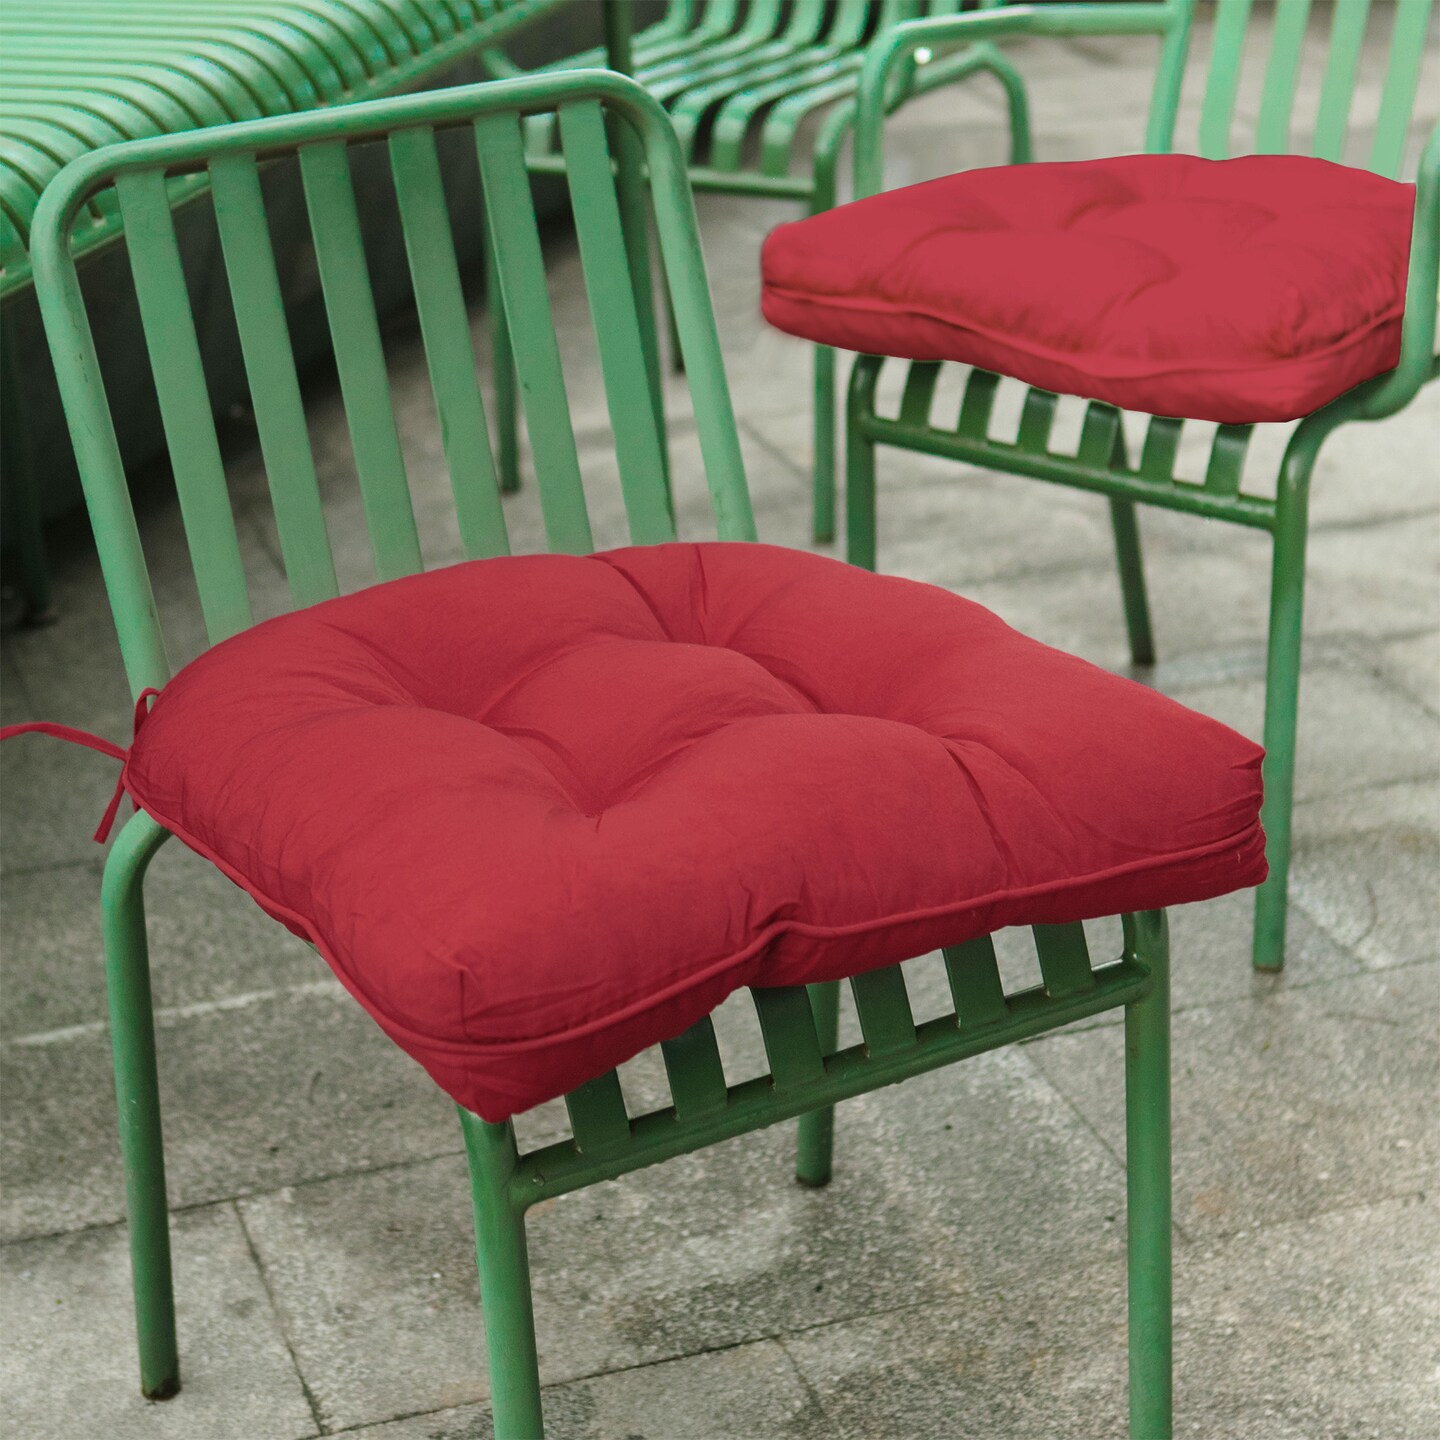 Peacenest Outdoor Patio Seat Cushion Set of 2-Waterproof Indoor Outdoor cushion